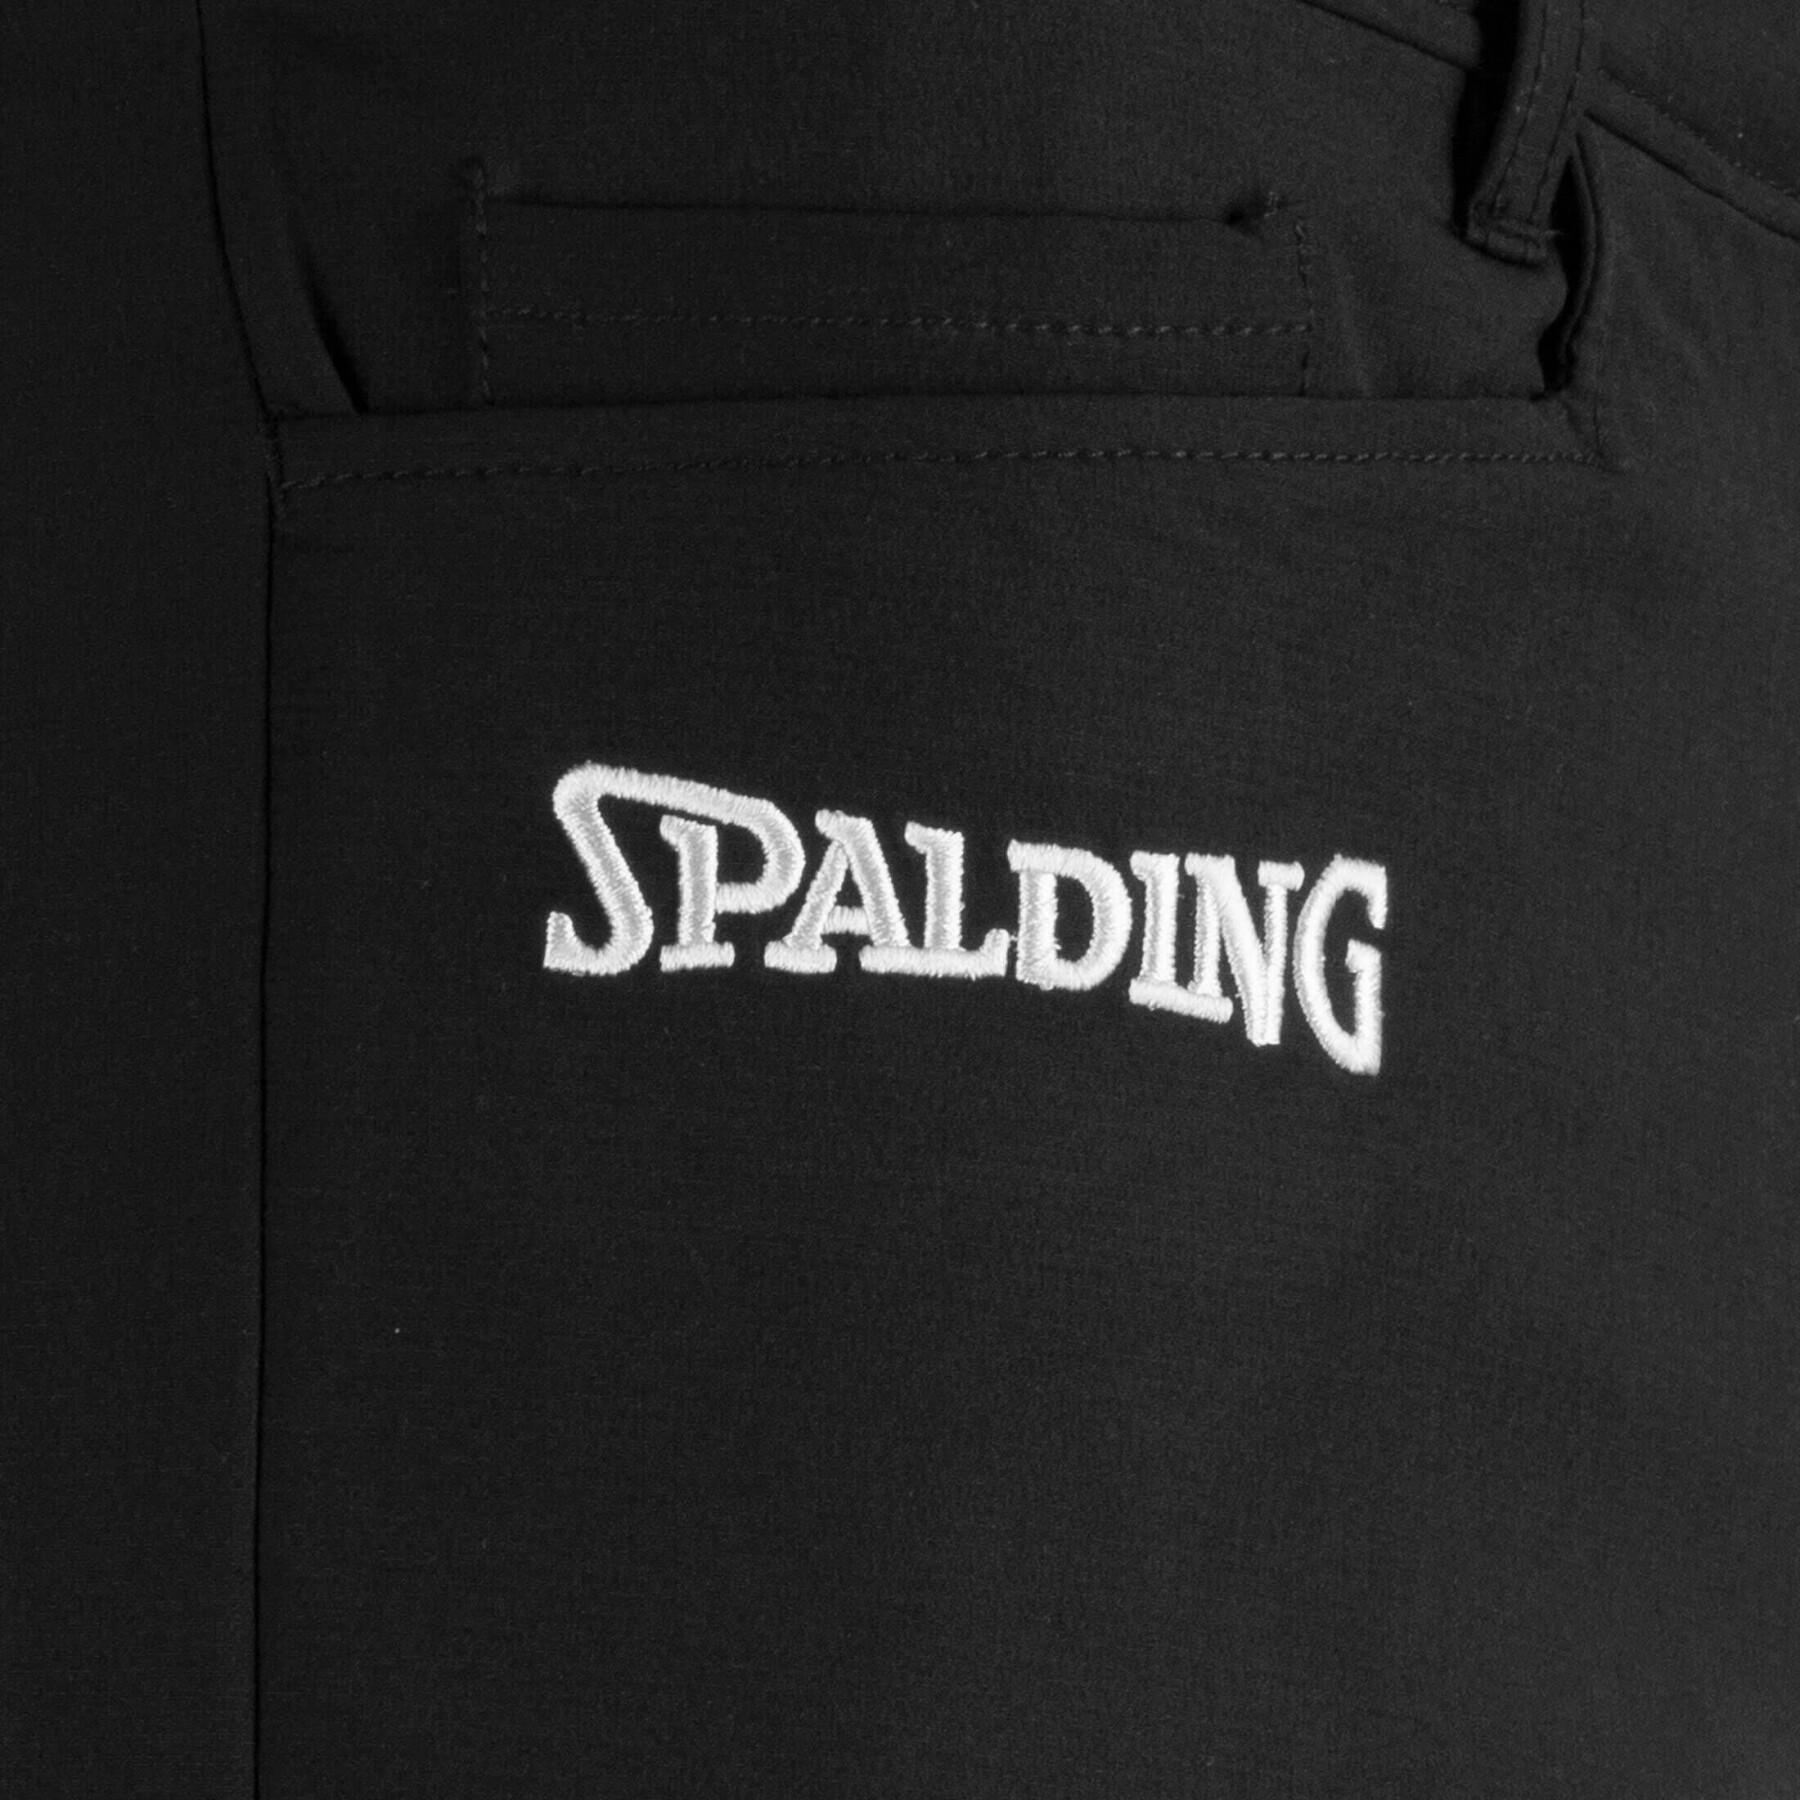 Pantalón Spalding Referee